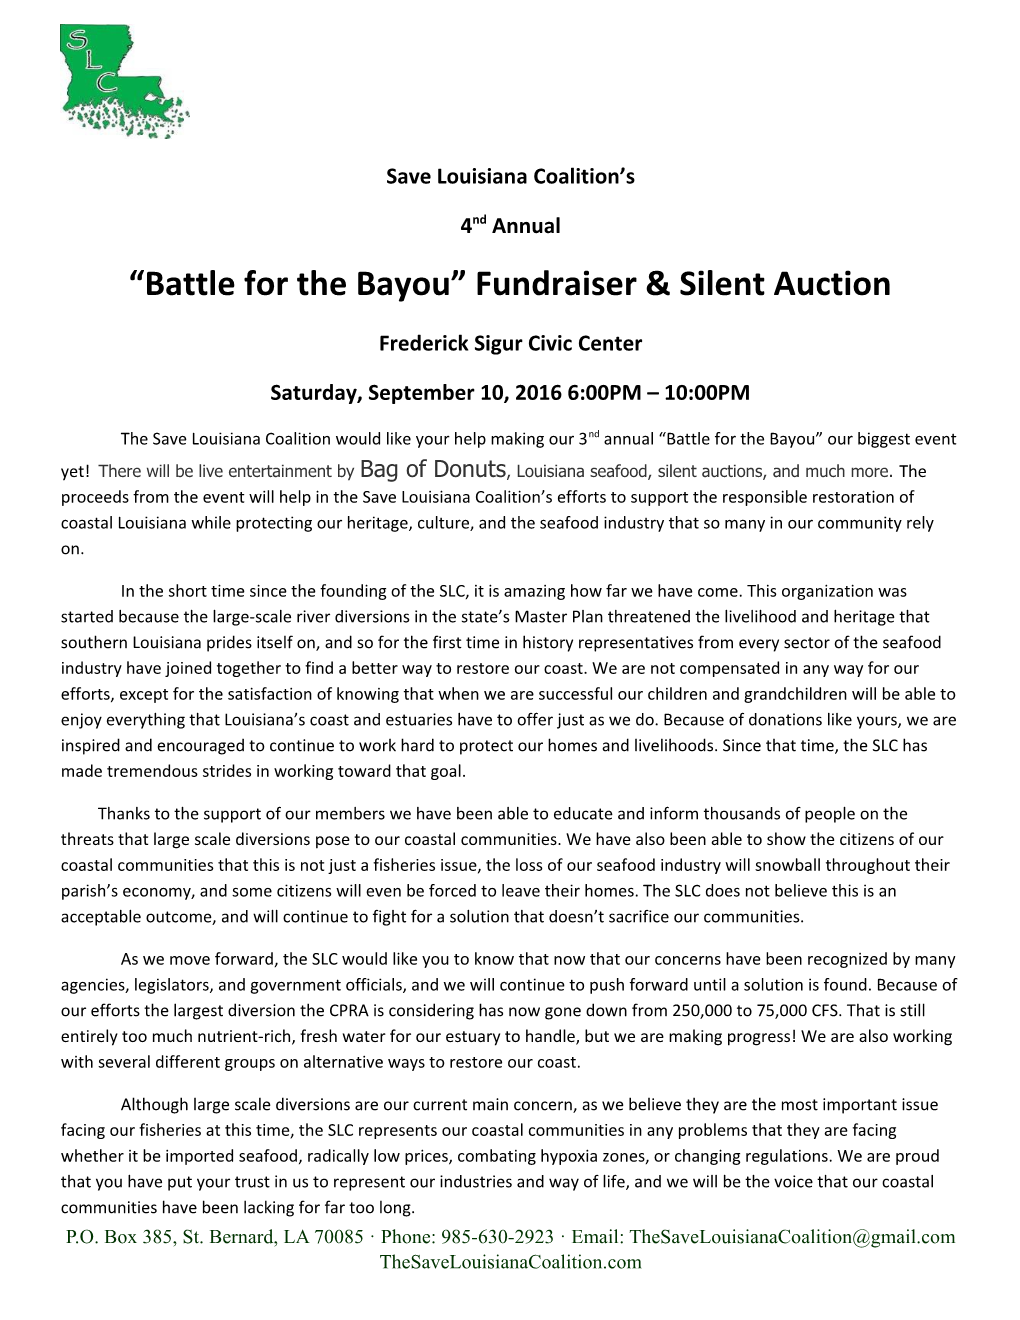 Battle for the Bayou Fundraiser & Silent Auction